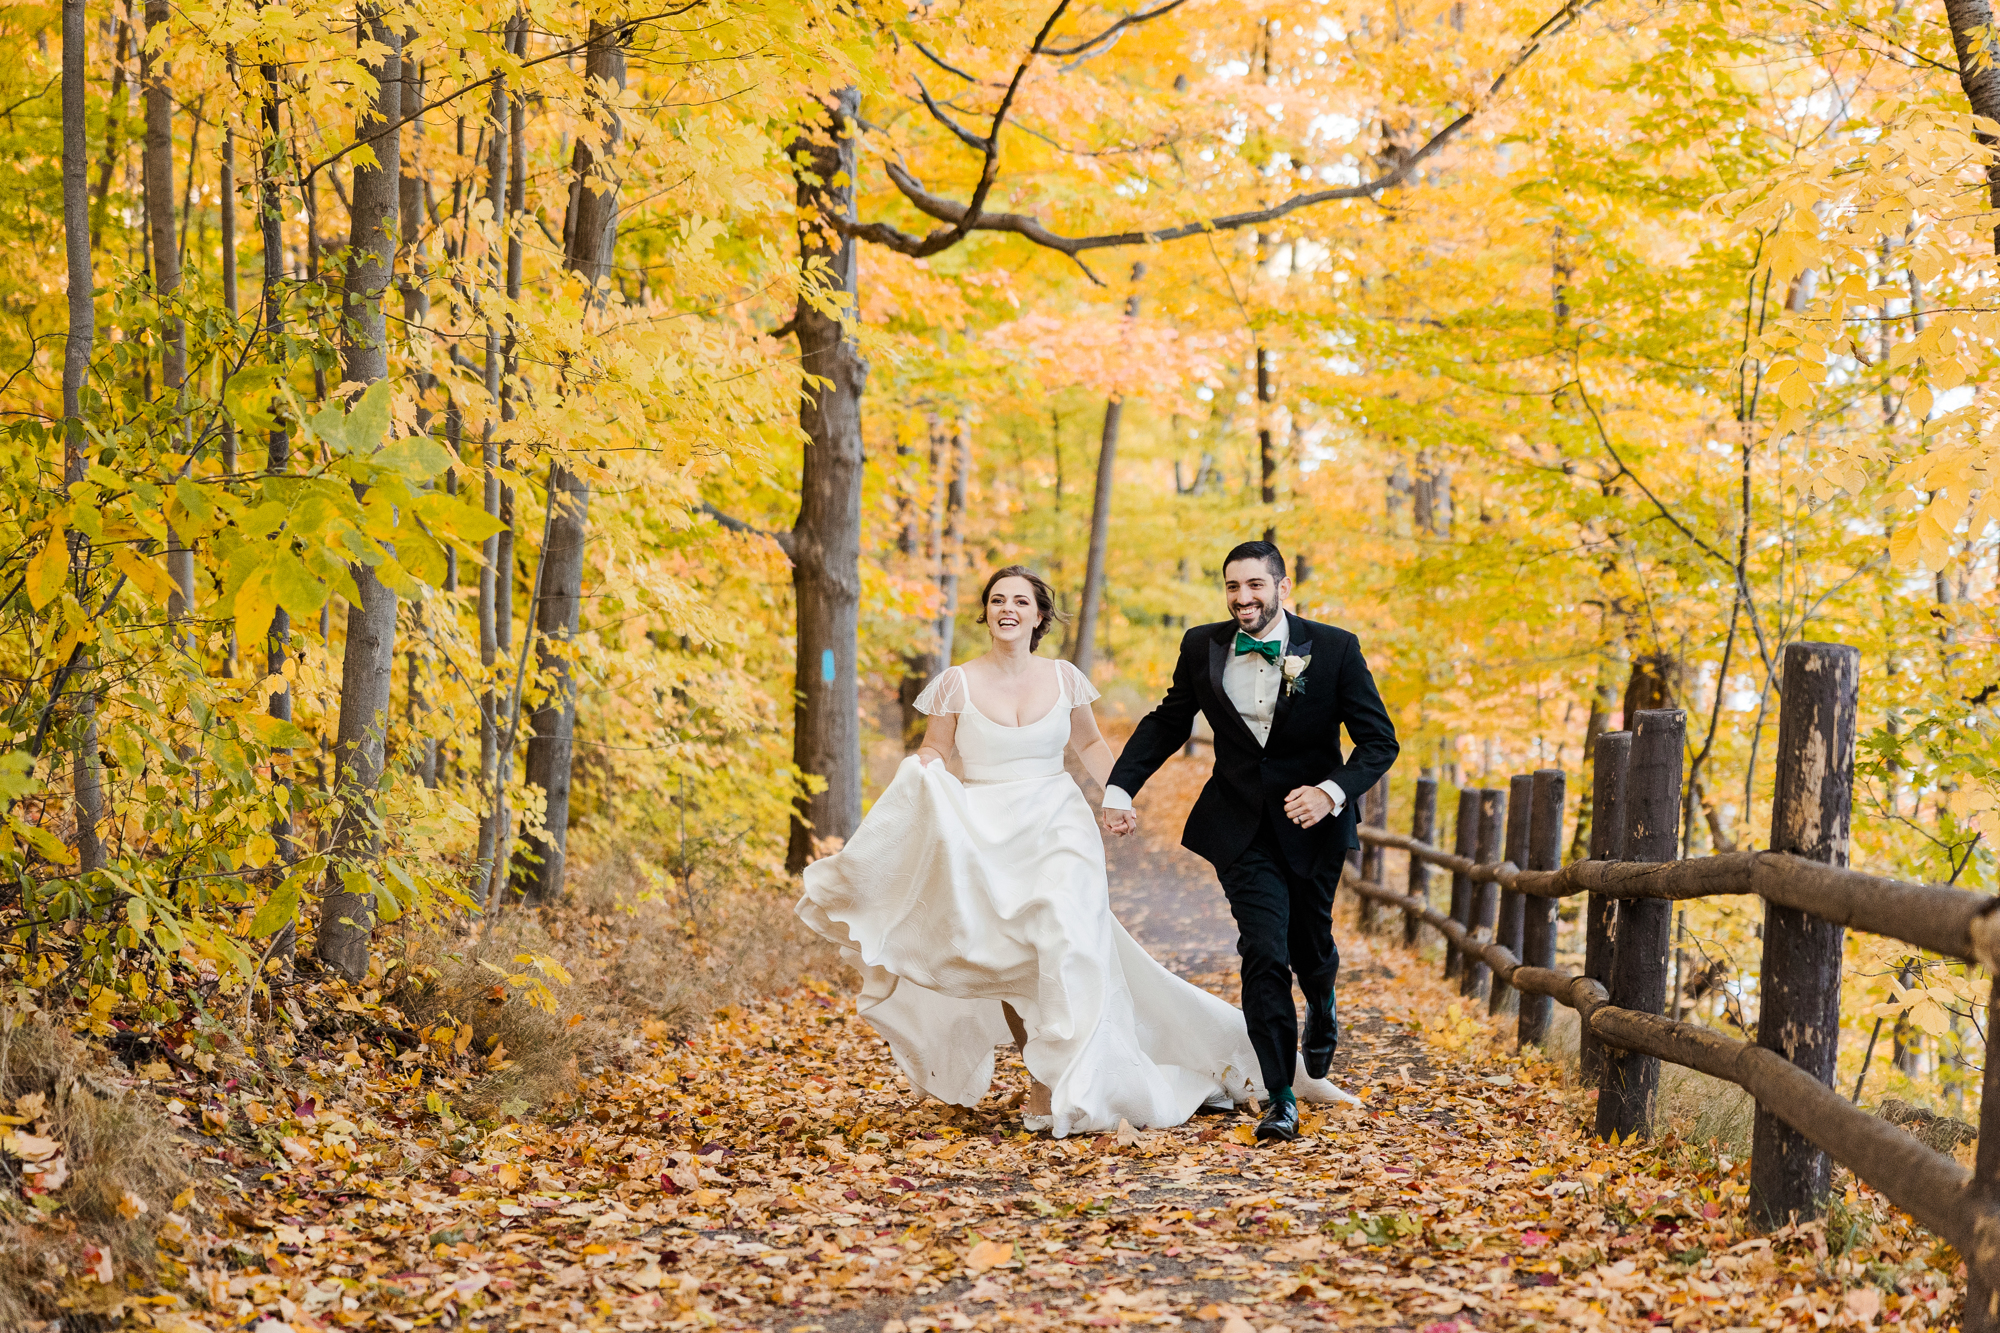 Sentimental Gate House Wedding in Fall